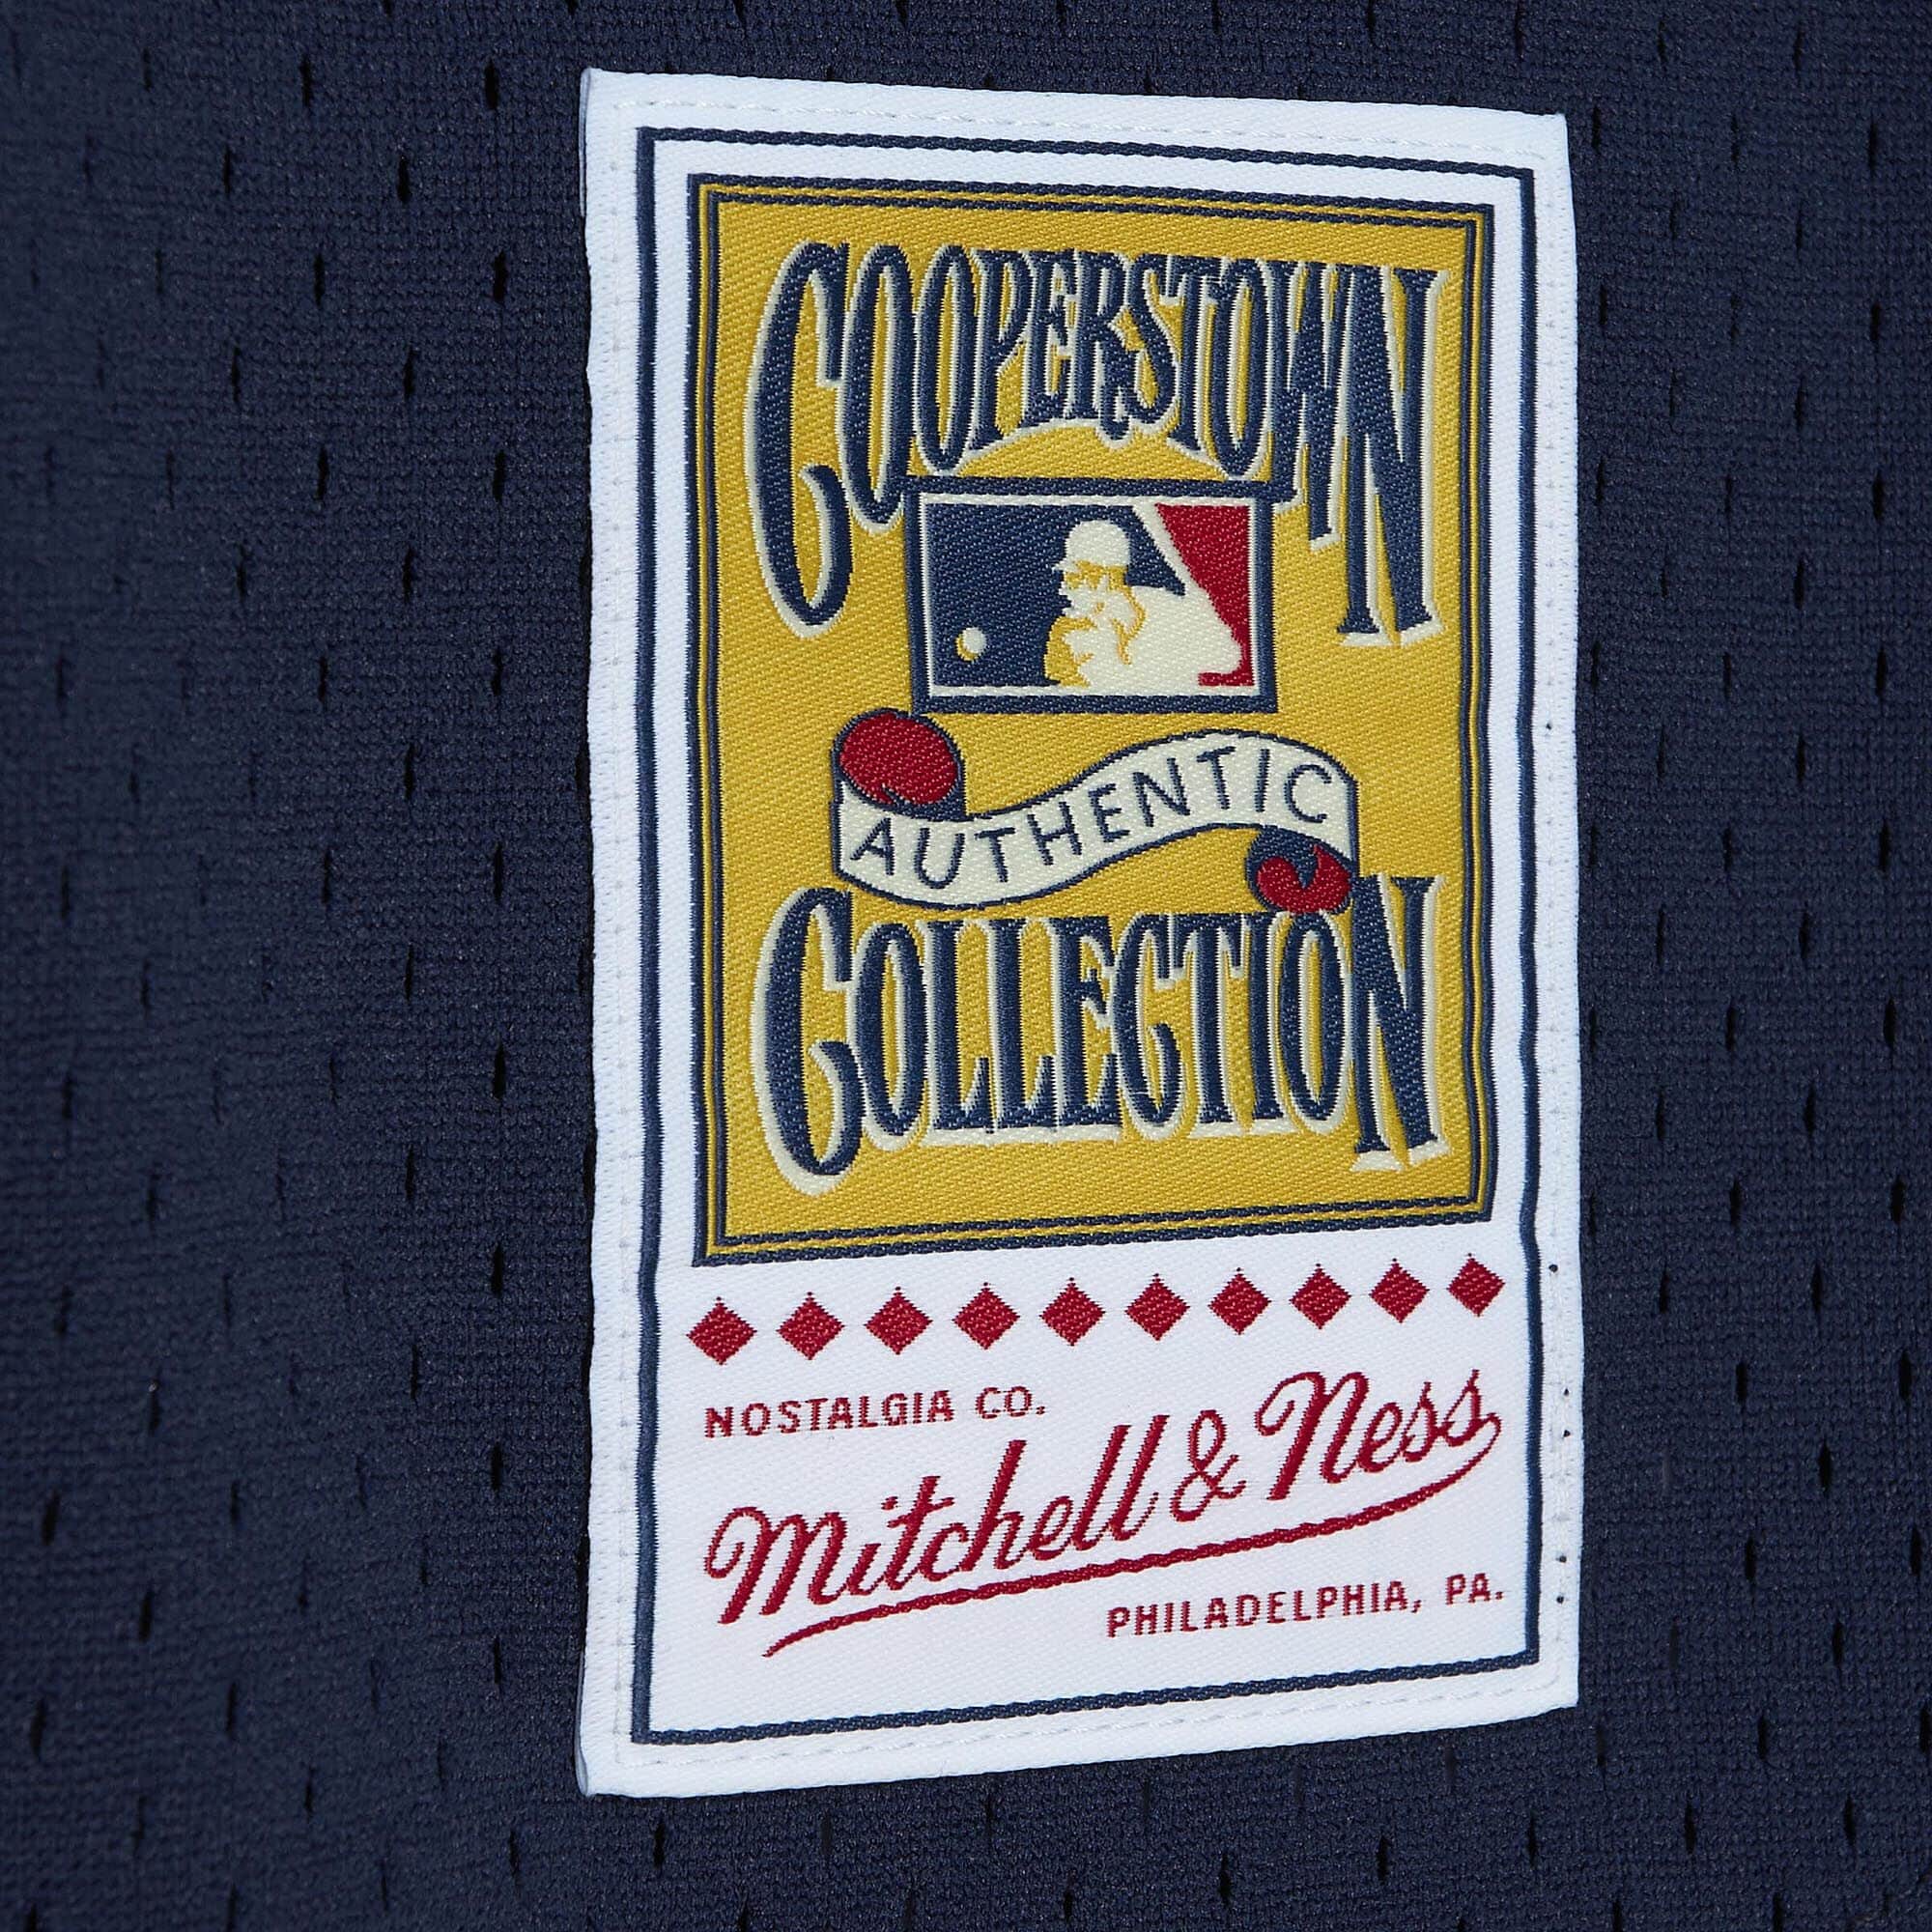 Mitchell & Ness Authentic Derek Jeter New York Yankees 1998 BP Jersey - Navy - M